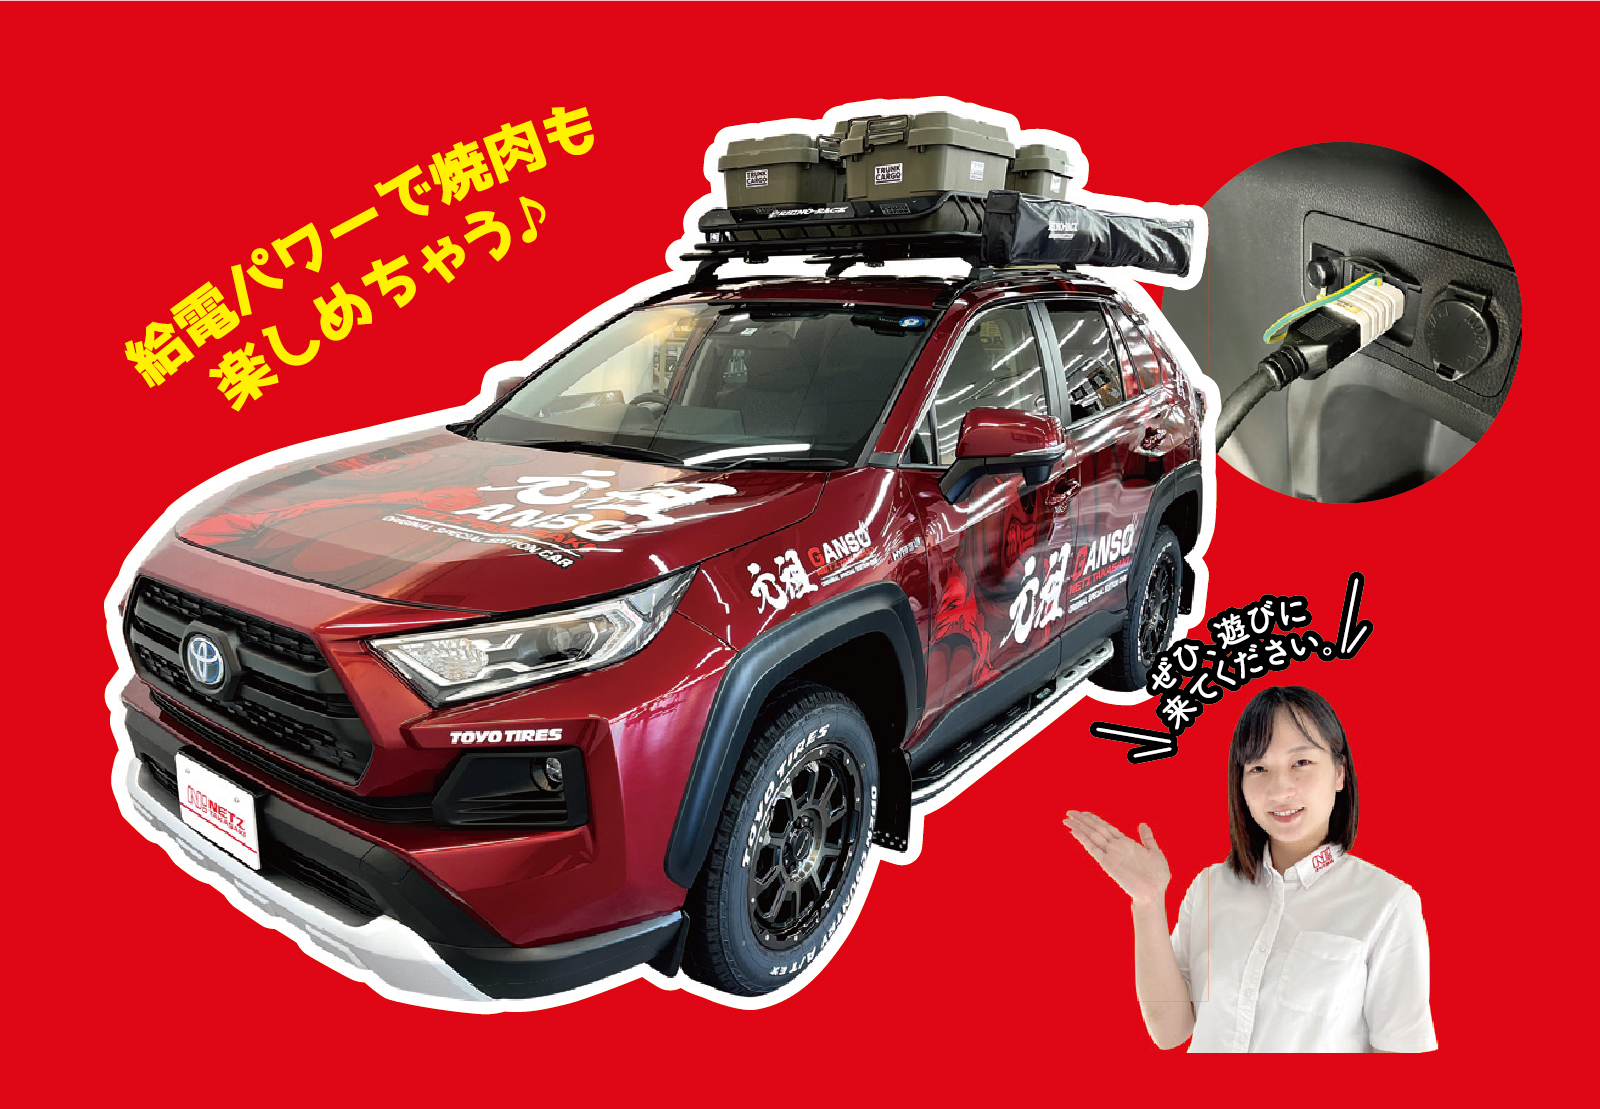 N!BASETAKASAKIにて車の給電機能を使った体験型イベントを開催